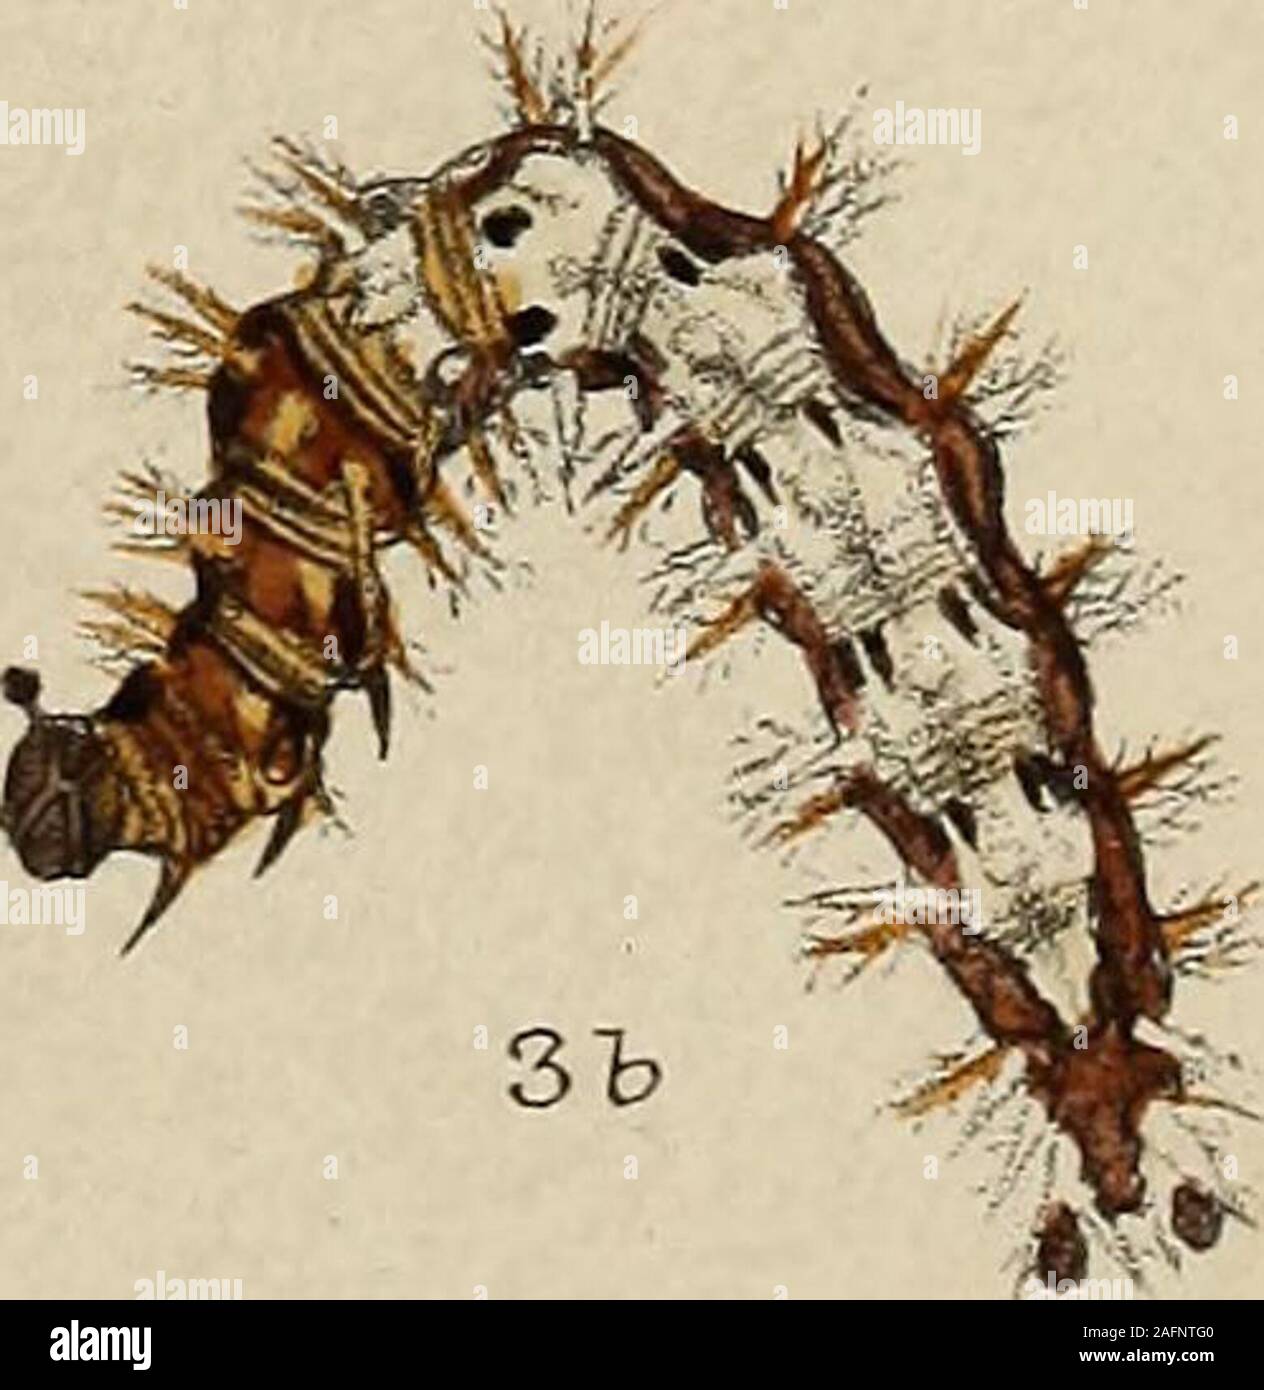 . The larvæ of the British butterflies and moths. 3c. F. C.Moore litla. W.BUCKLER del-. West^ernoaaan &.Co.im p- PLATE X. Argynnis Paphia. 1, la, lb, 1c, 1 d, larva after last moult; 1 e, pupa. See pp. 58—65. Argynnis Adippe. 2, 2 a, 2 b, 2 c, 2 6?, 2 e, larva after last moult; 2/,pupa. See pp. 65—71. Argynnis Aglaia. 3, 3 a, larva after last moult; 3 b, pupa. See pp. 71—73. Plate X. Stock Photo